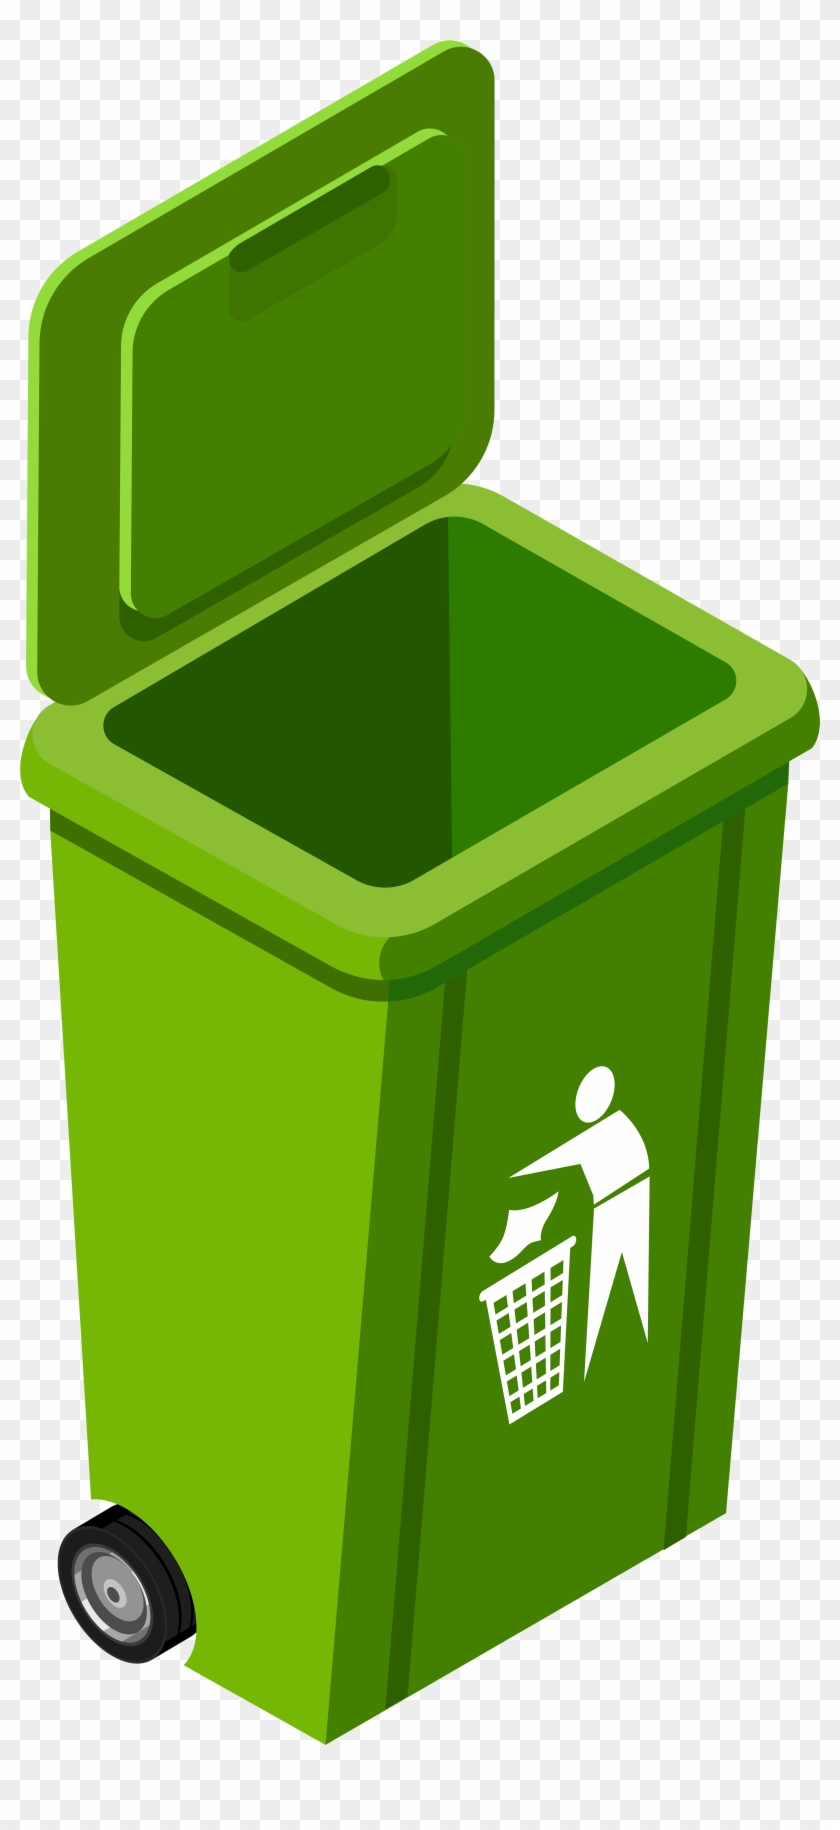 Green Trash Can Png Clip Art Image - Trash Bin Clipart Png Transparent Png #54277